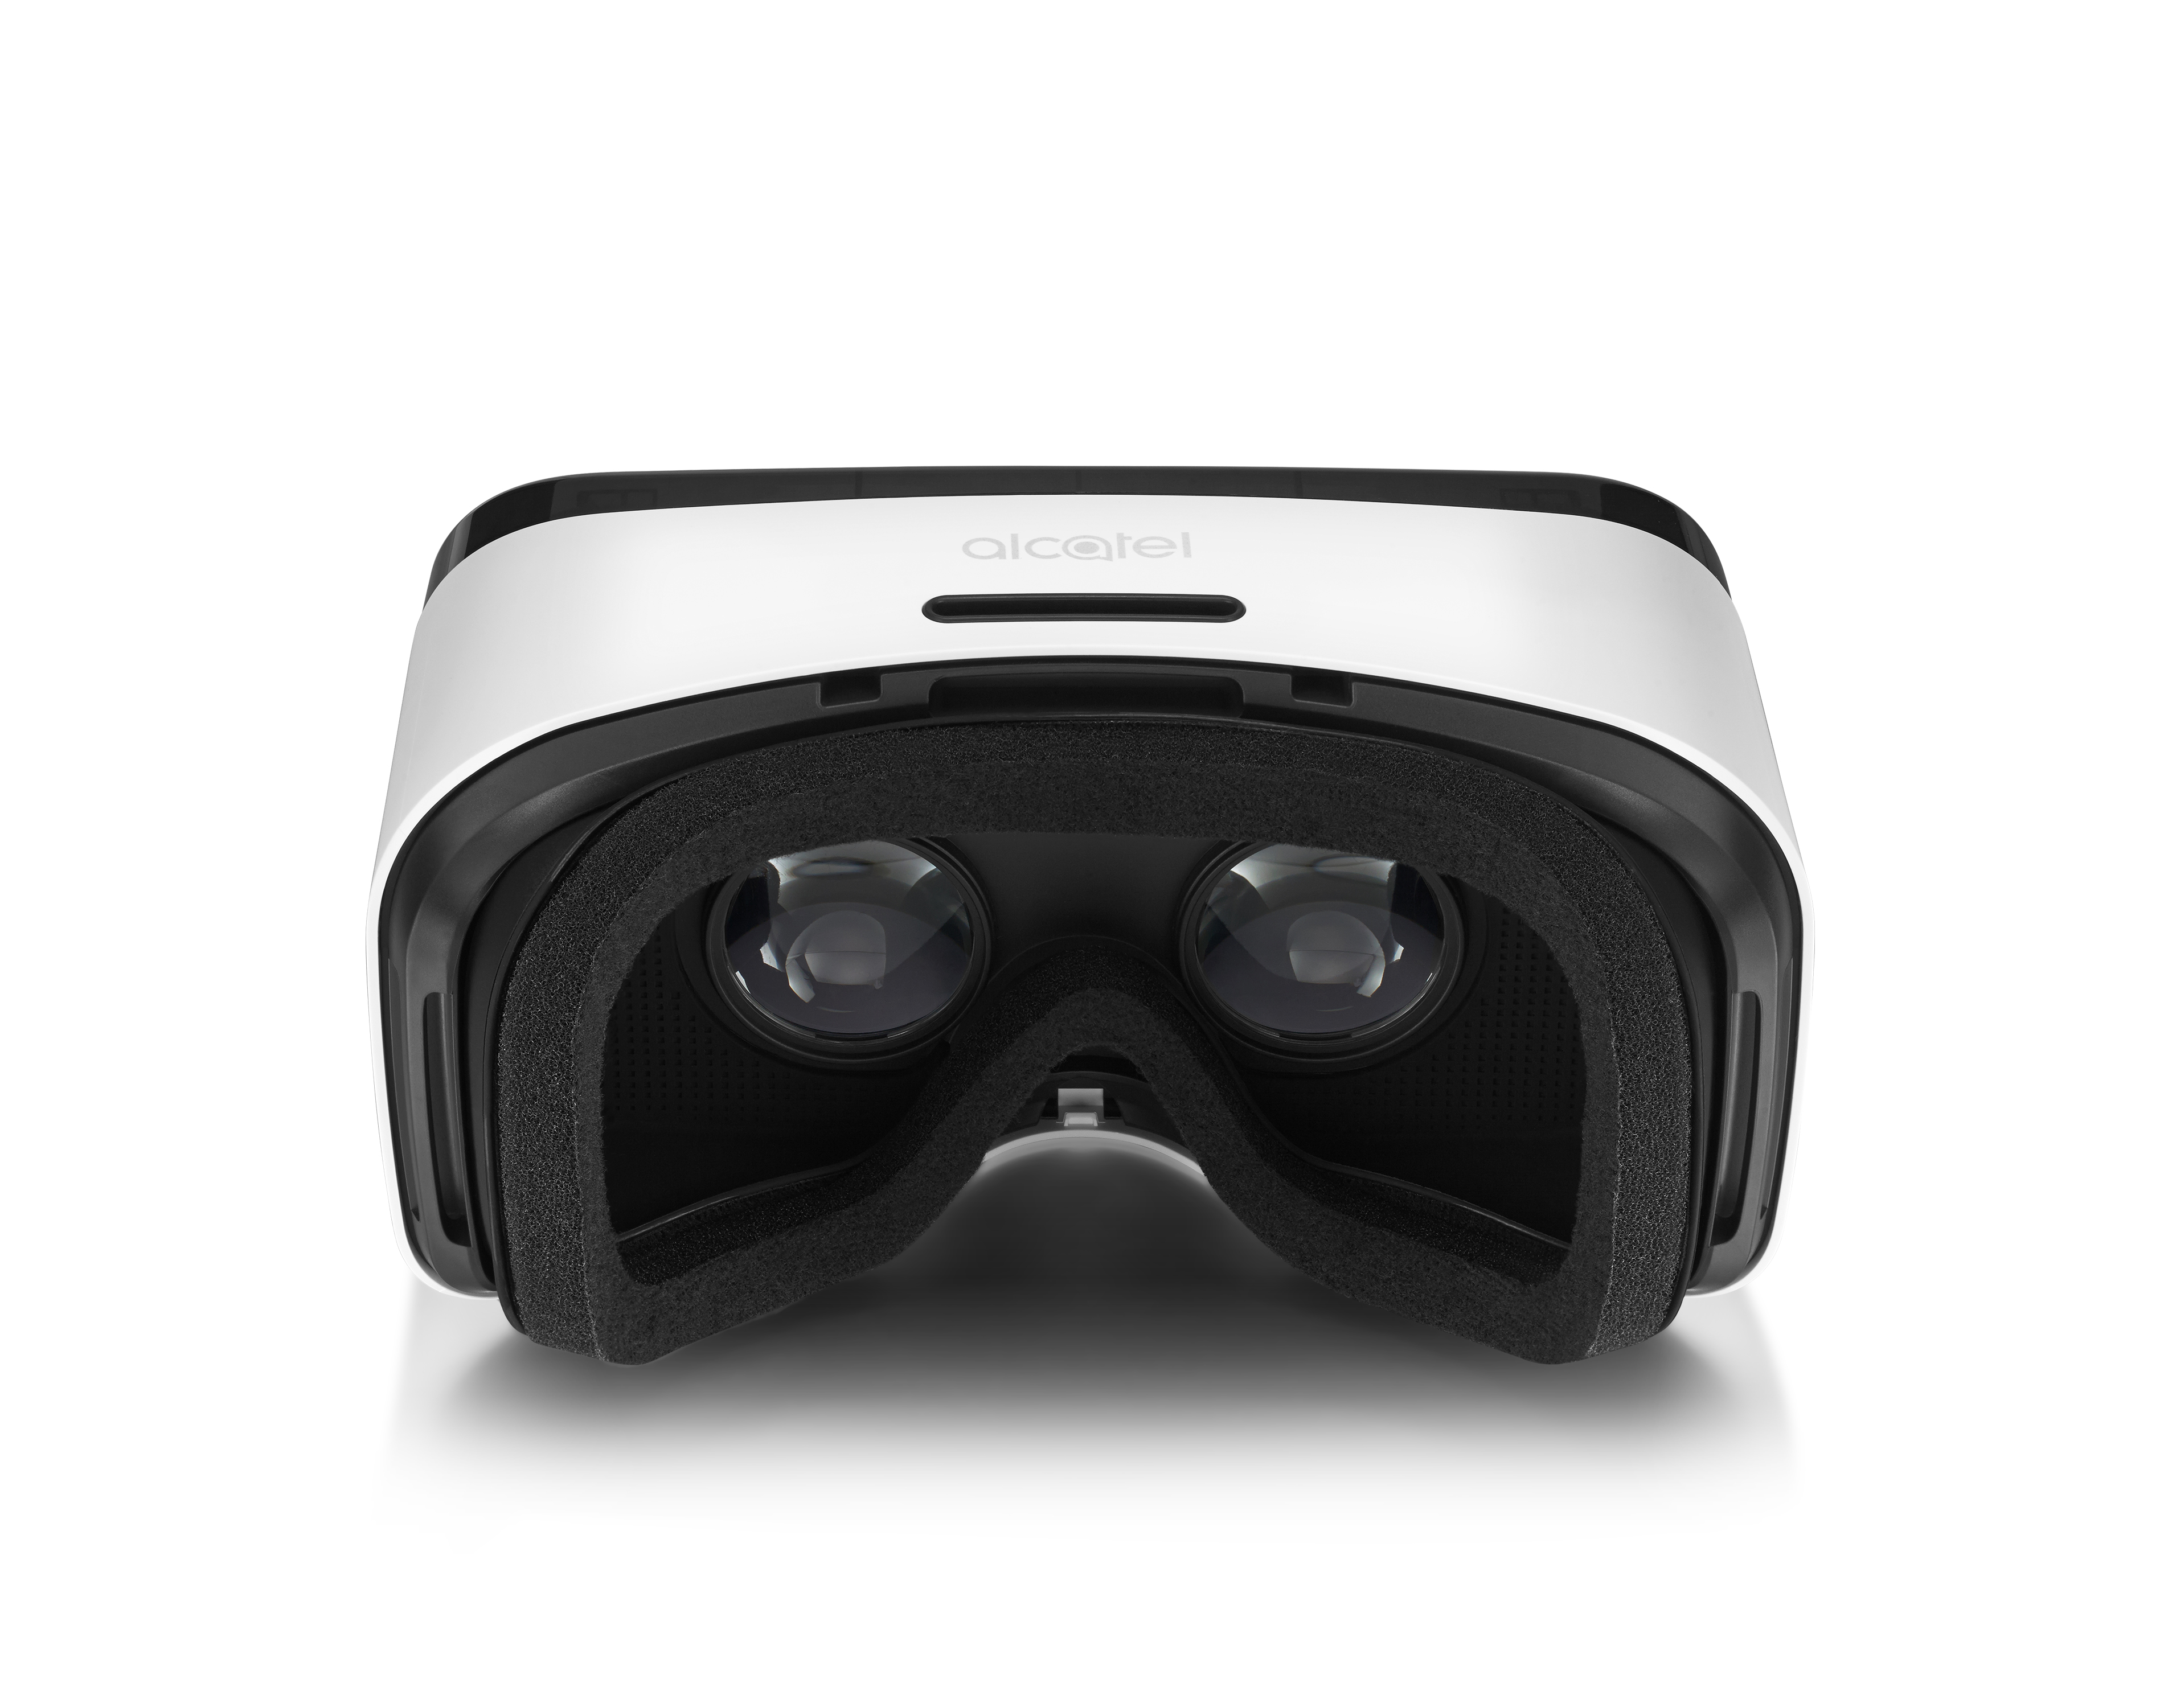 Alcatel VR headset